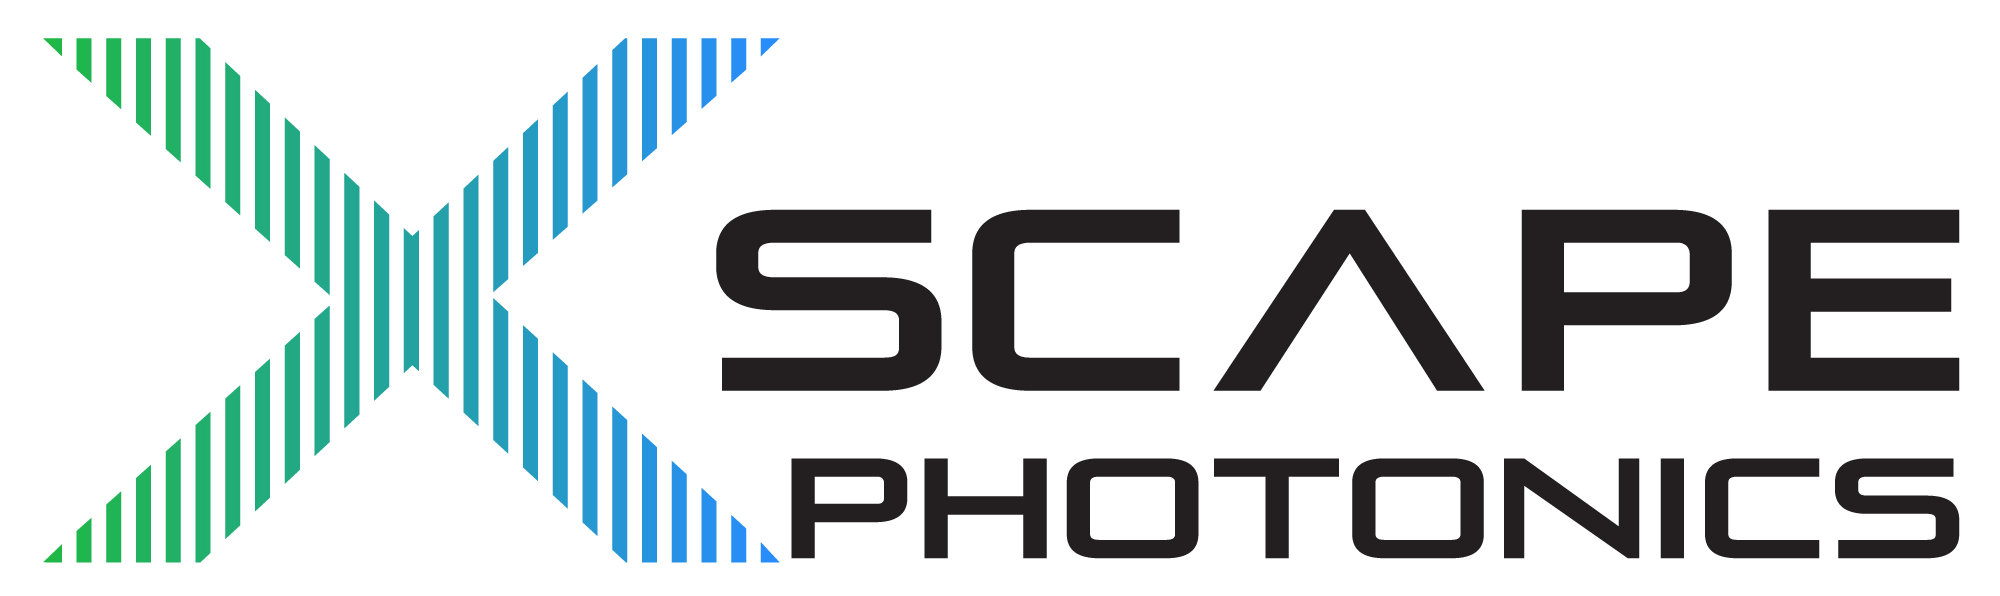 Xscape Photonics logo